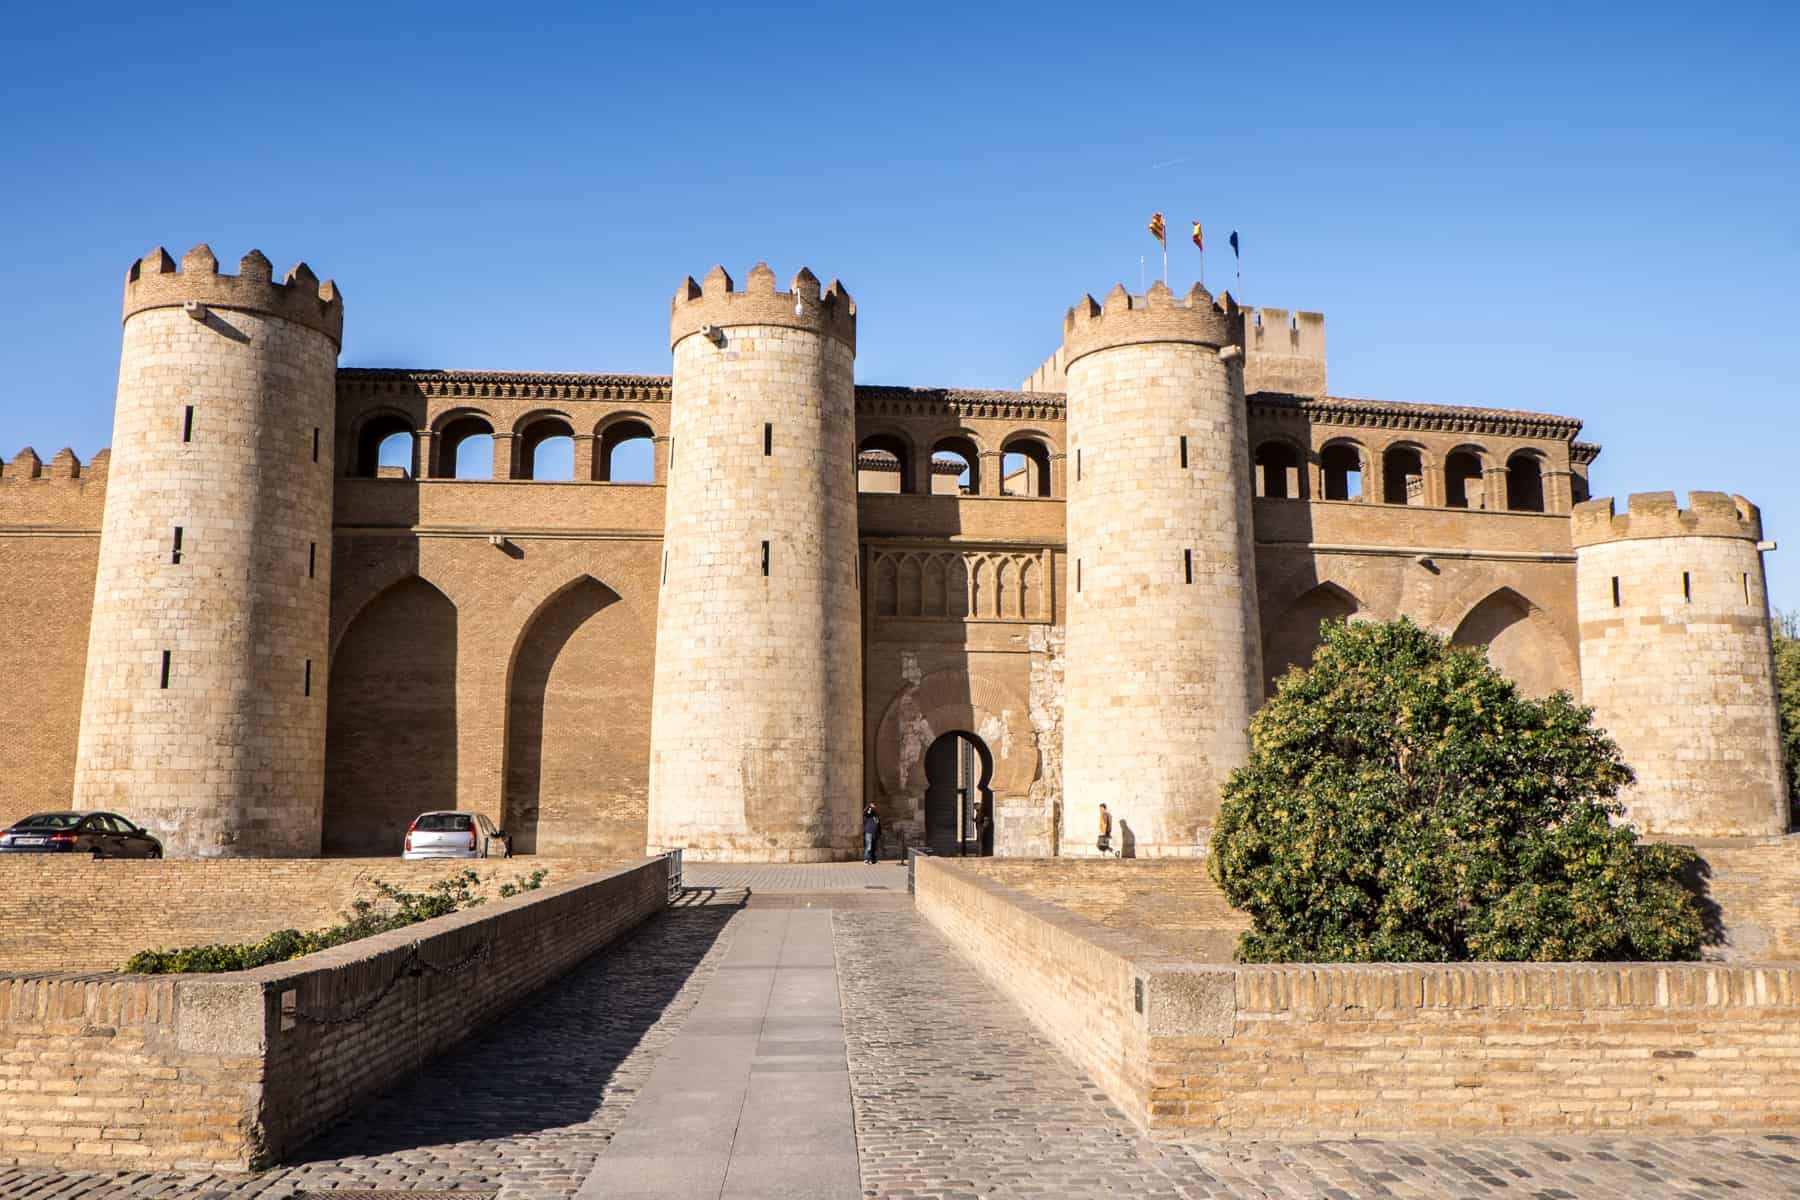 The golden stone, four-pillar castle-like Ajafería Palace in Zaragoza, Spain. 